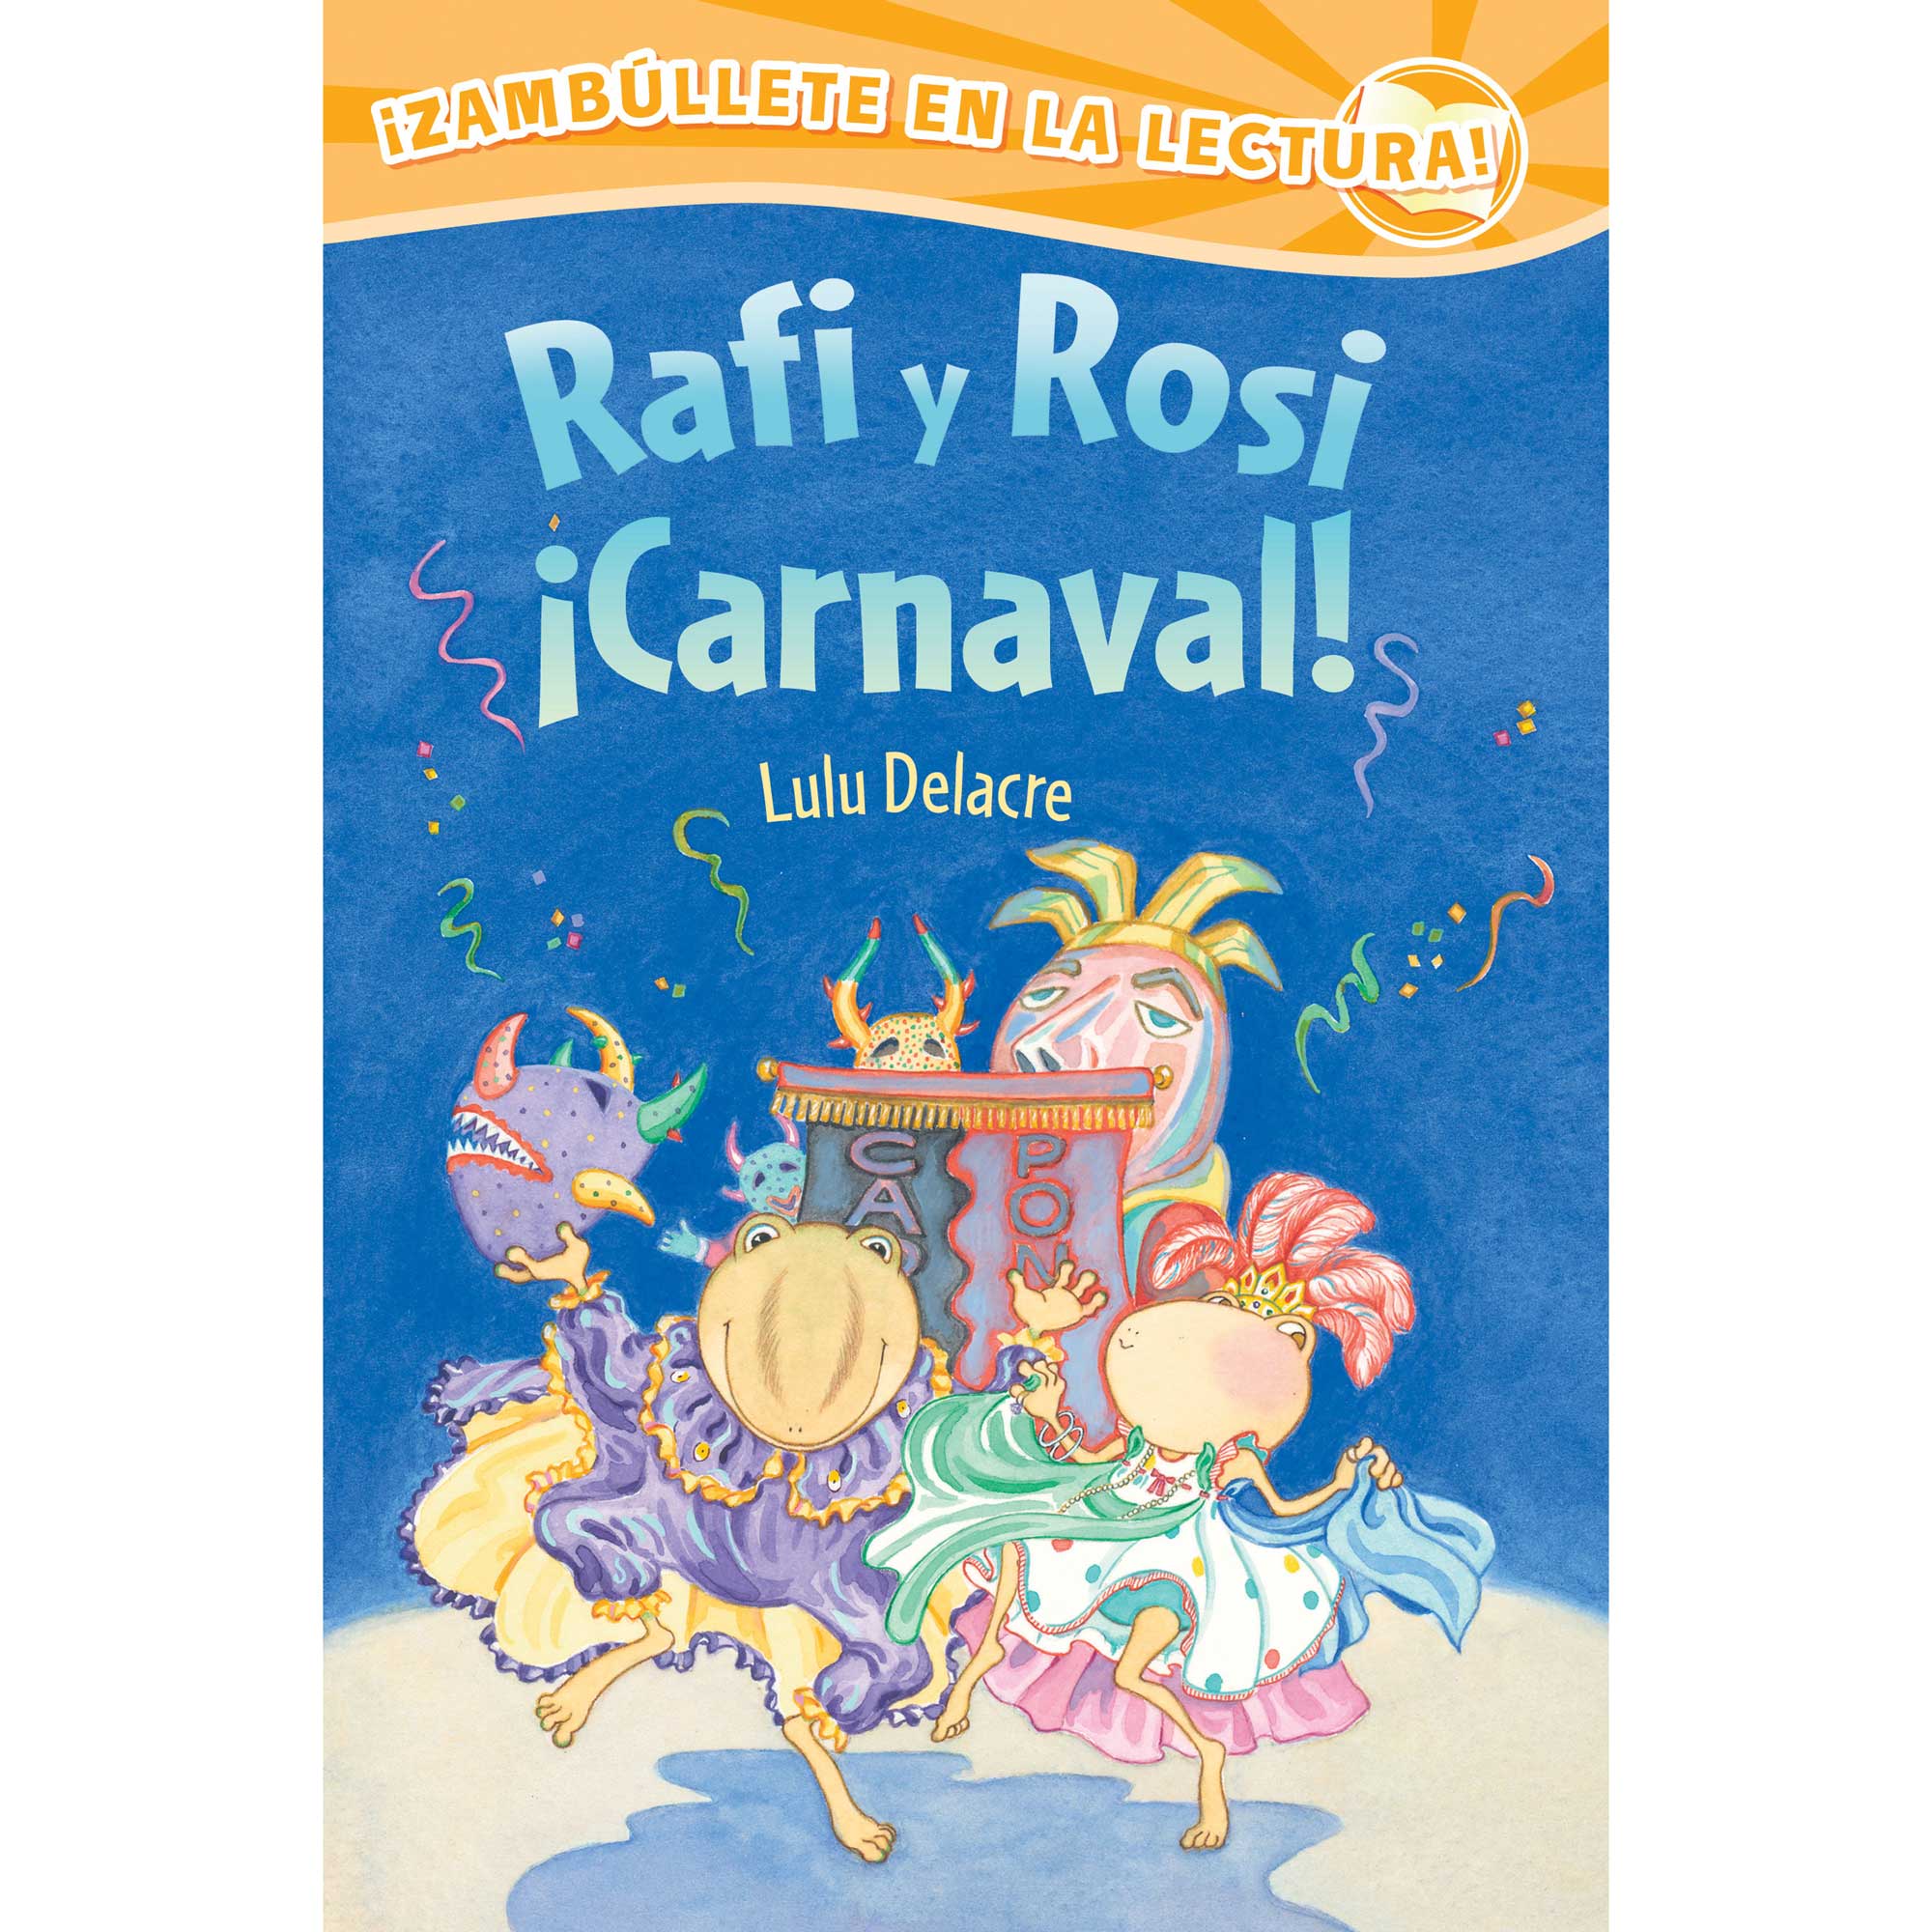 Rafi y Rosi Carnival by Lulu Delacre